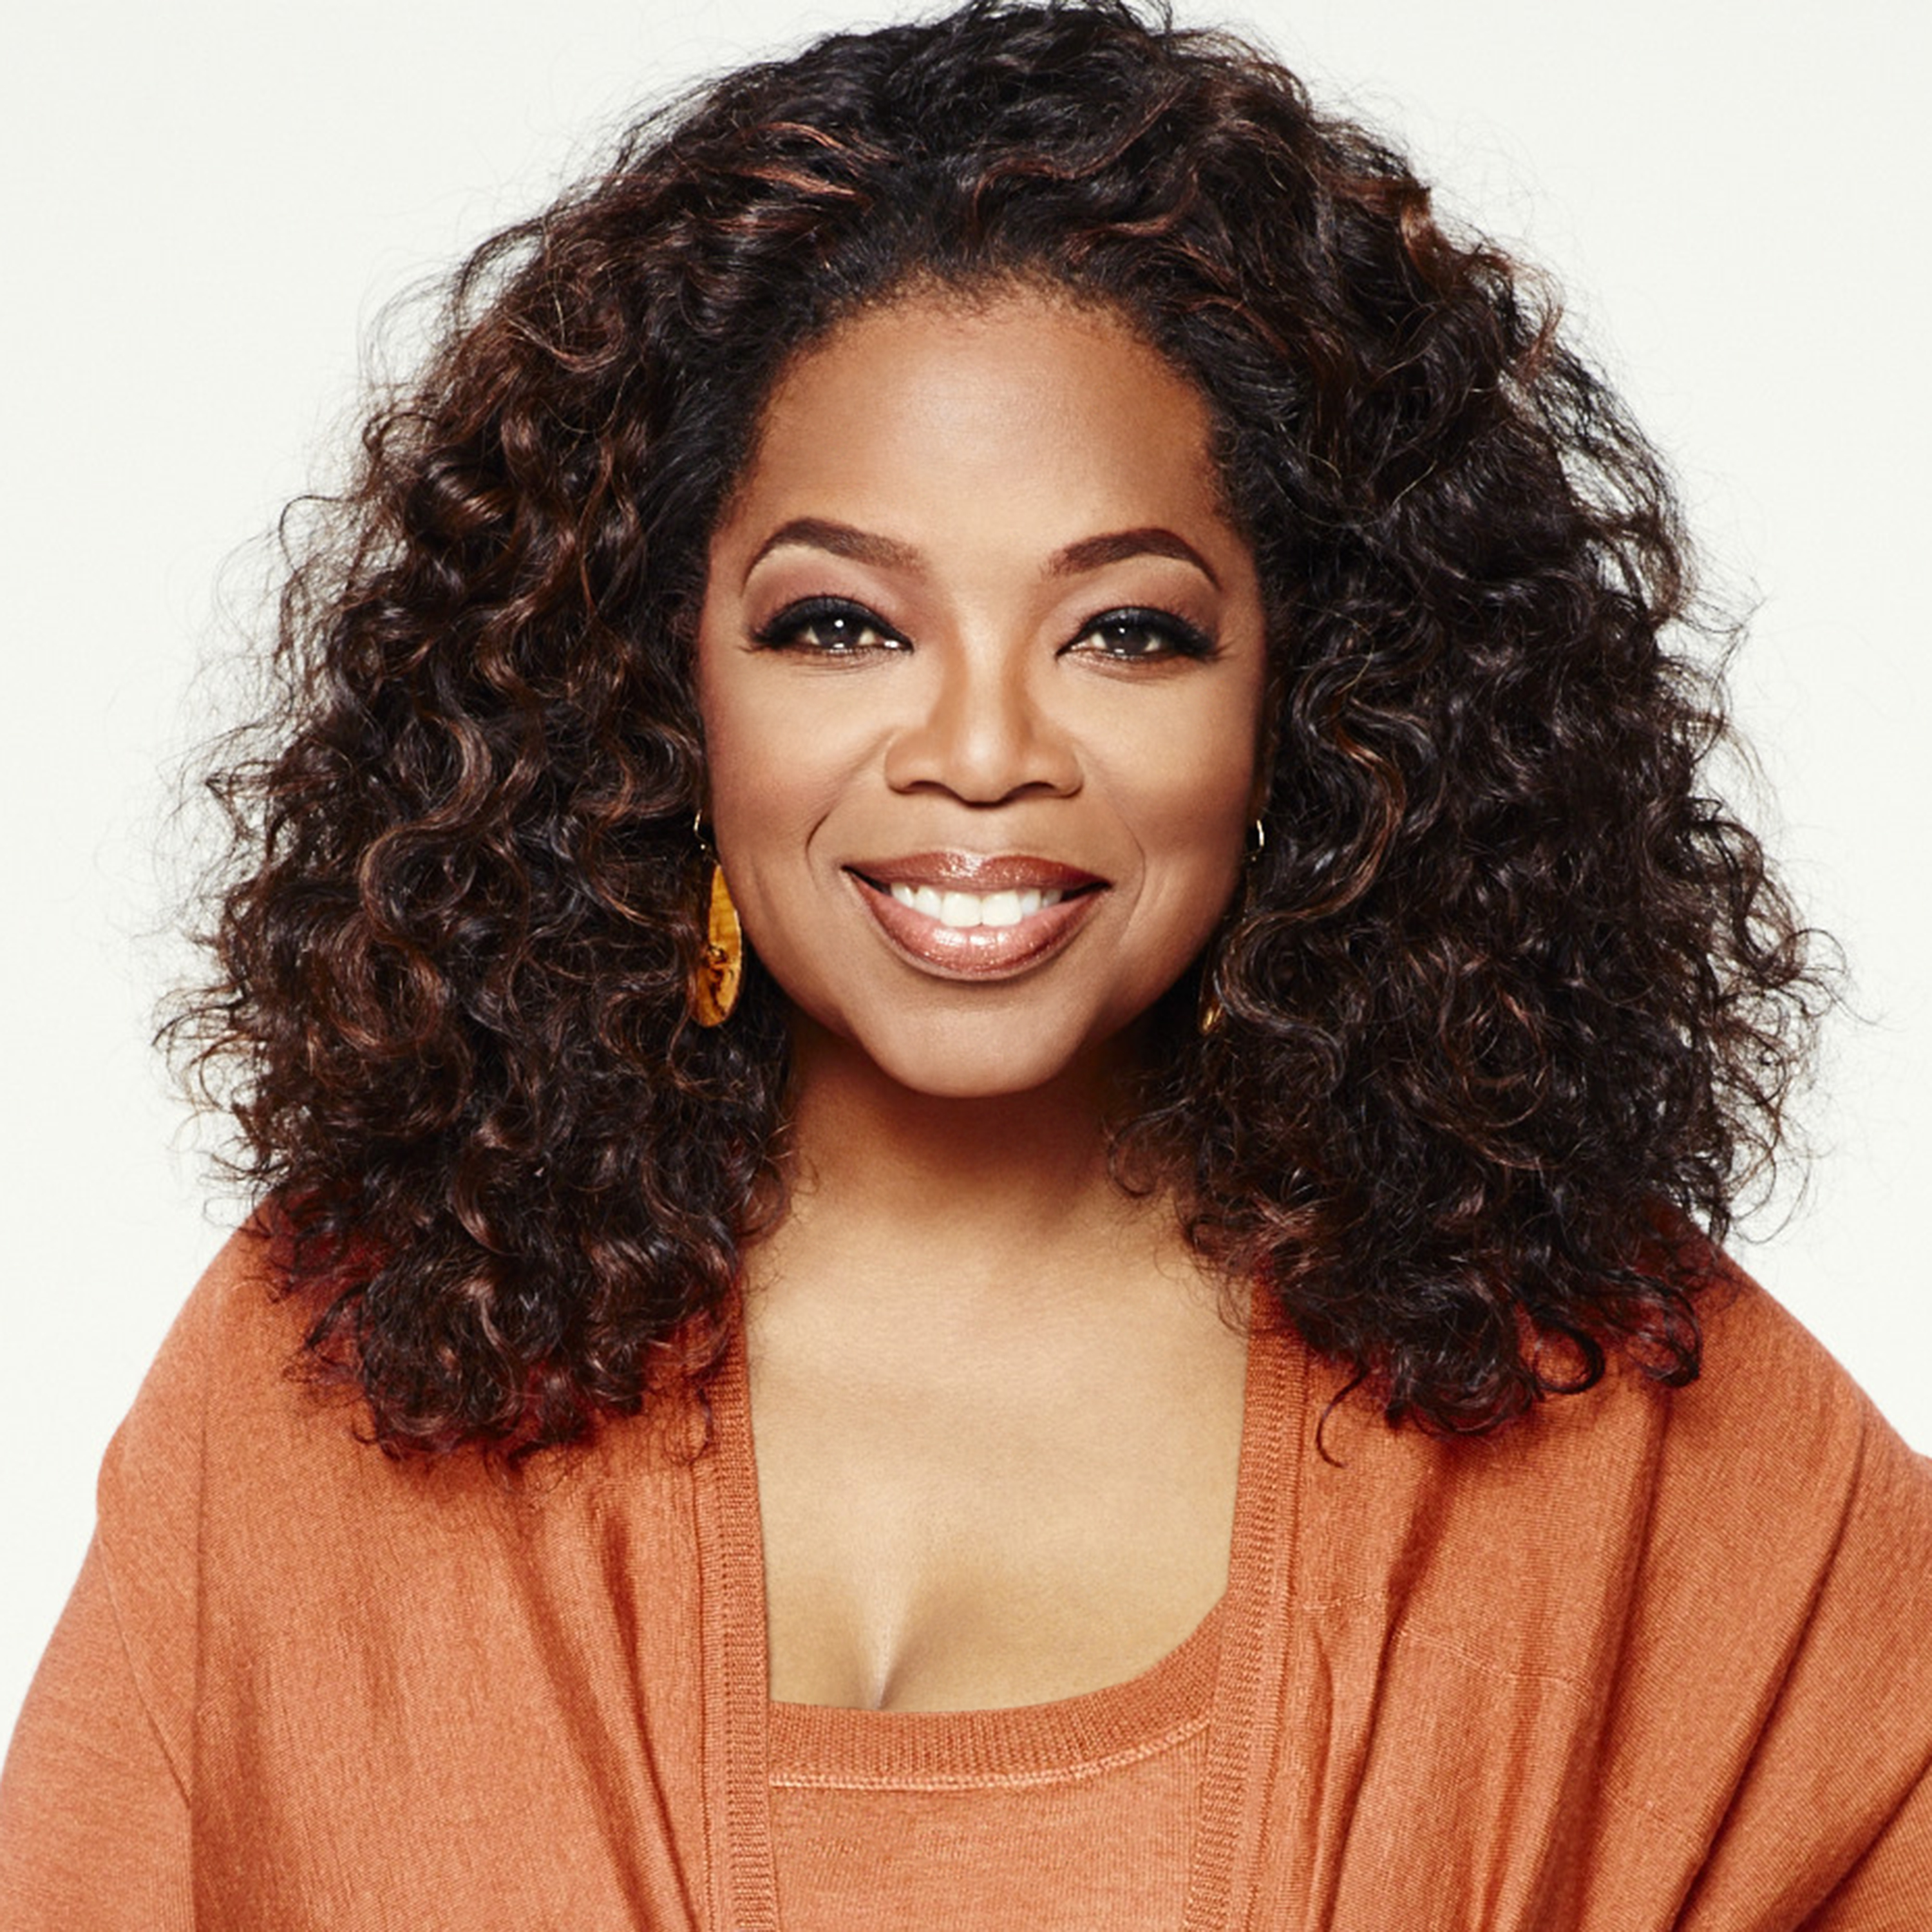 Oprah Winfrey launches Mealtime Stories with Kraft Heinz